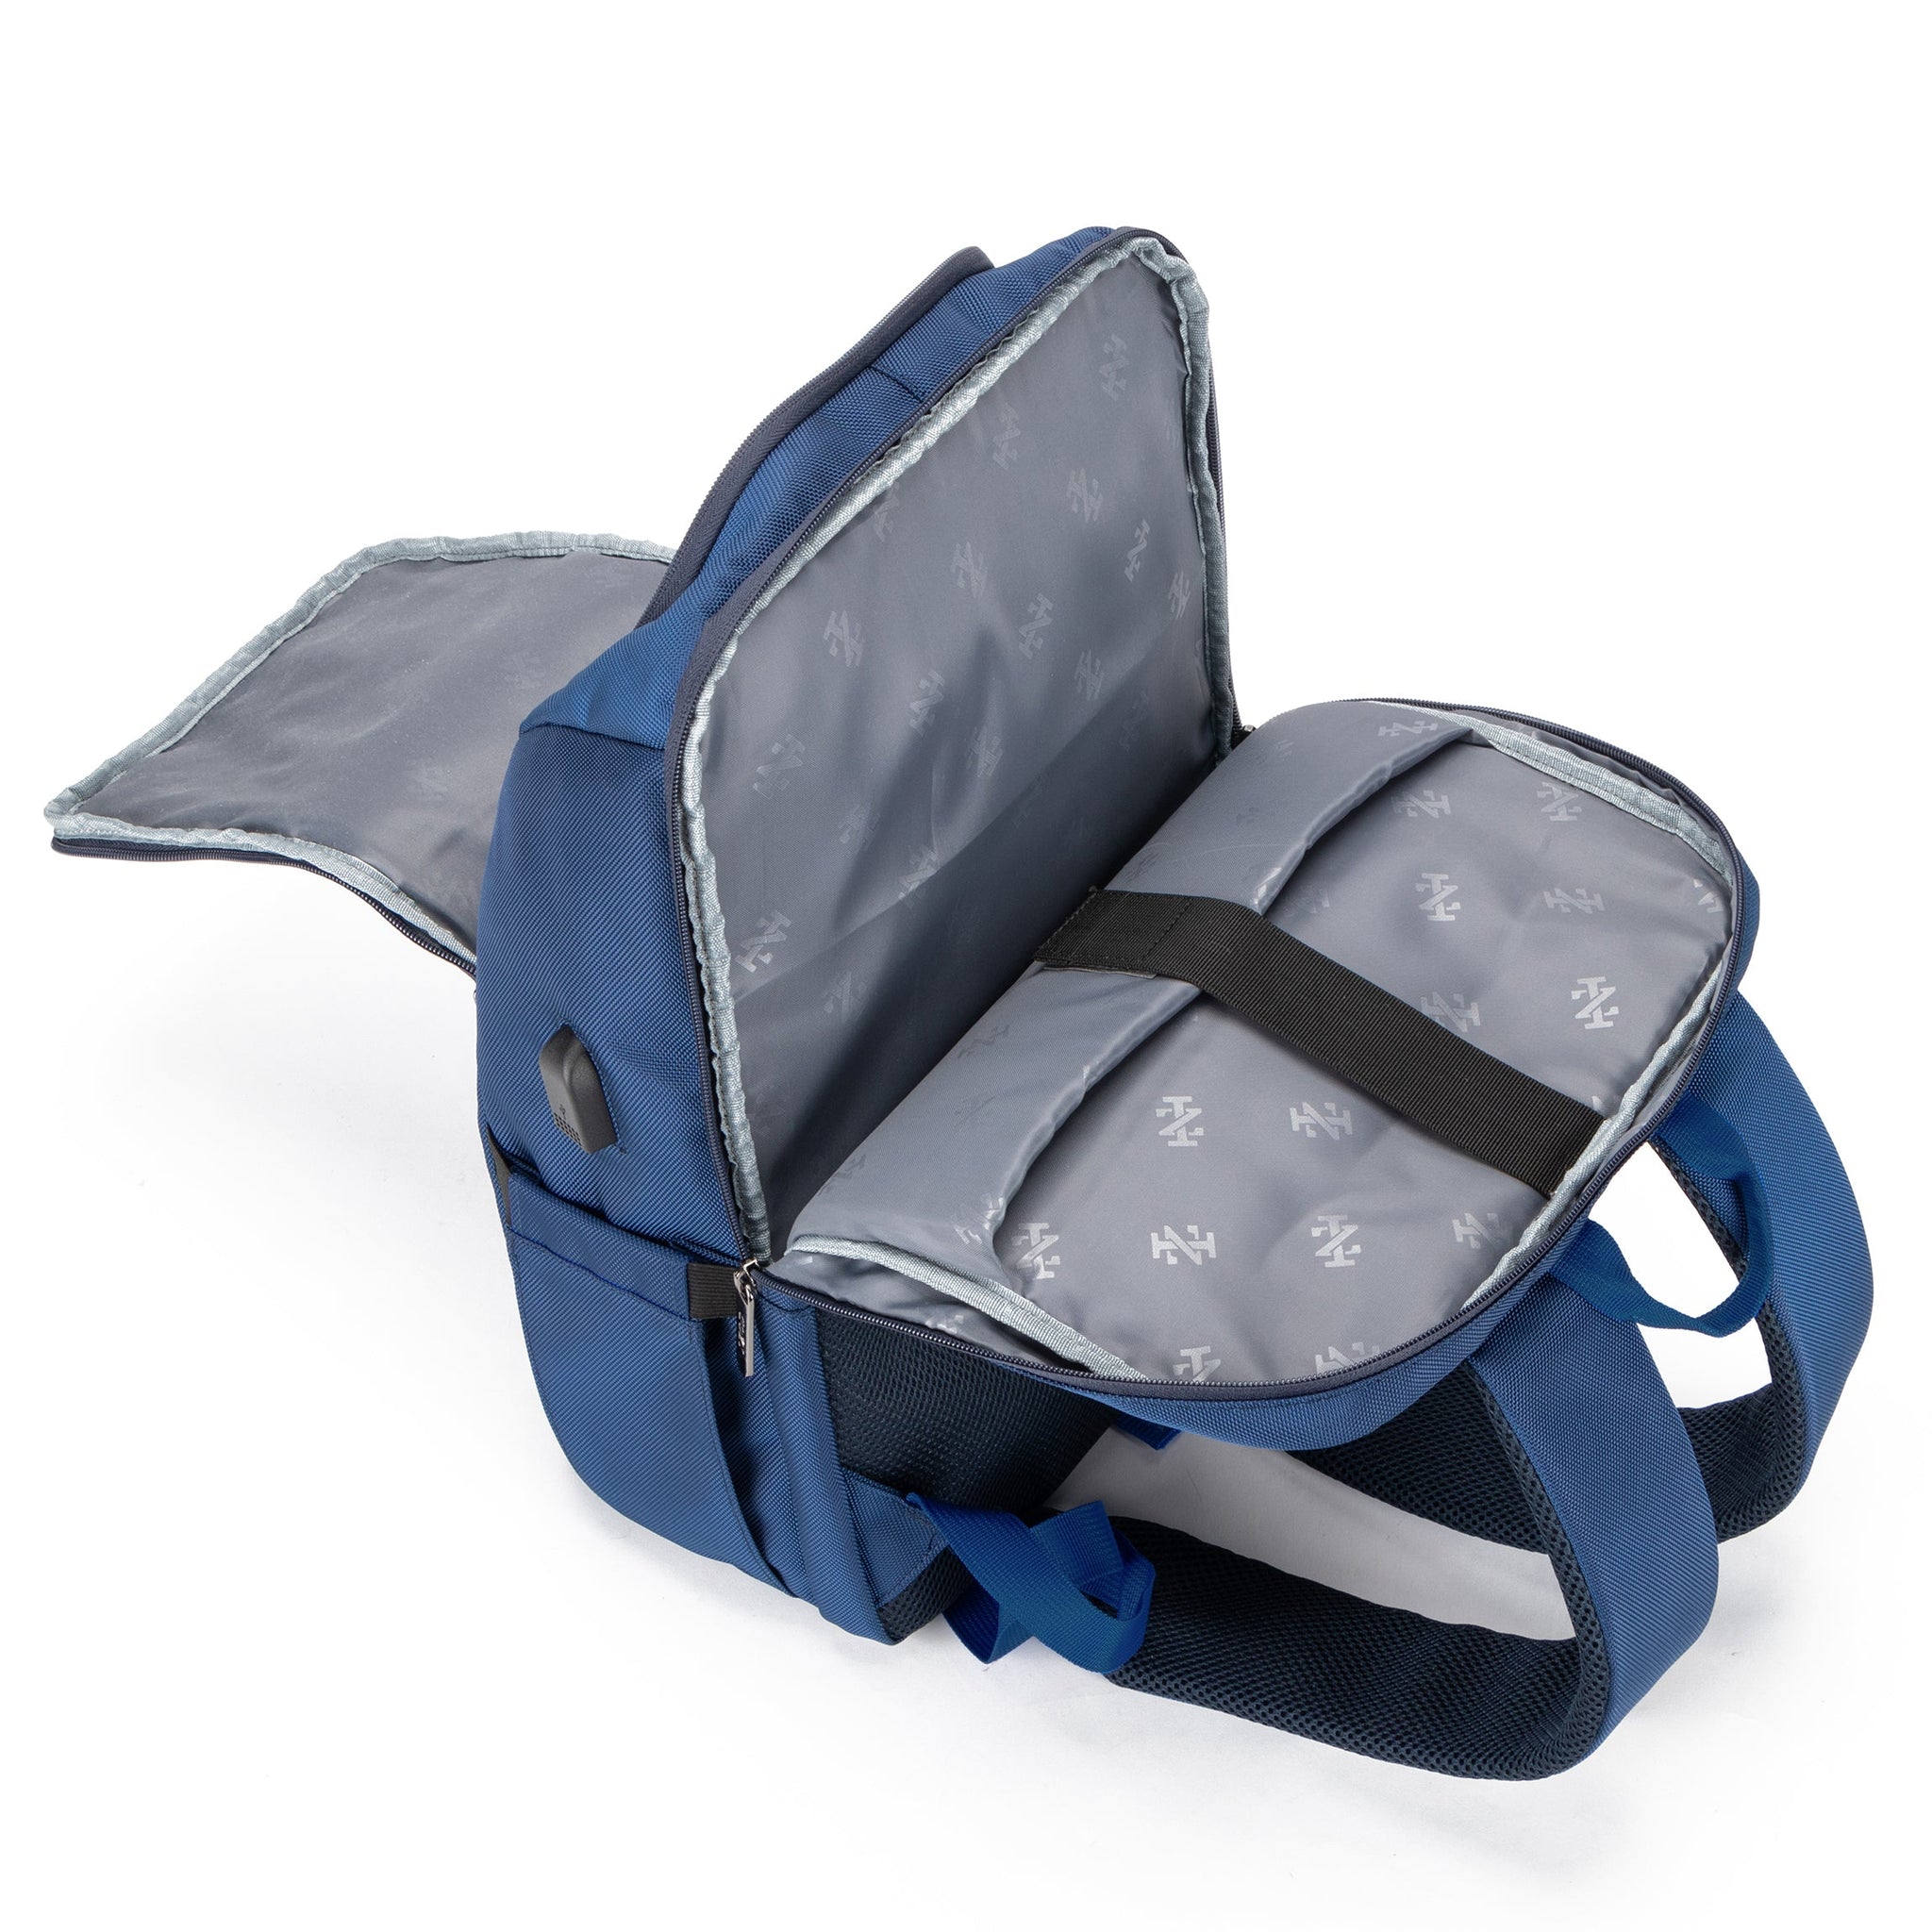 IZOD Gina Slim 15.6" Laptop Backpack with USB Charging Port